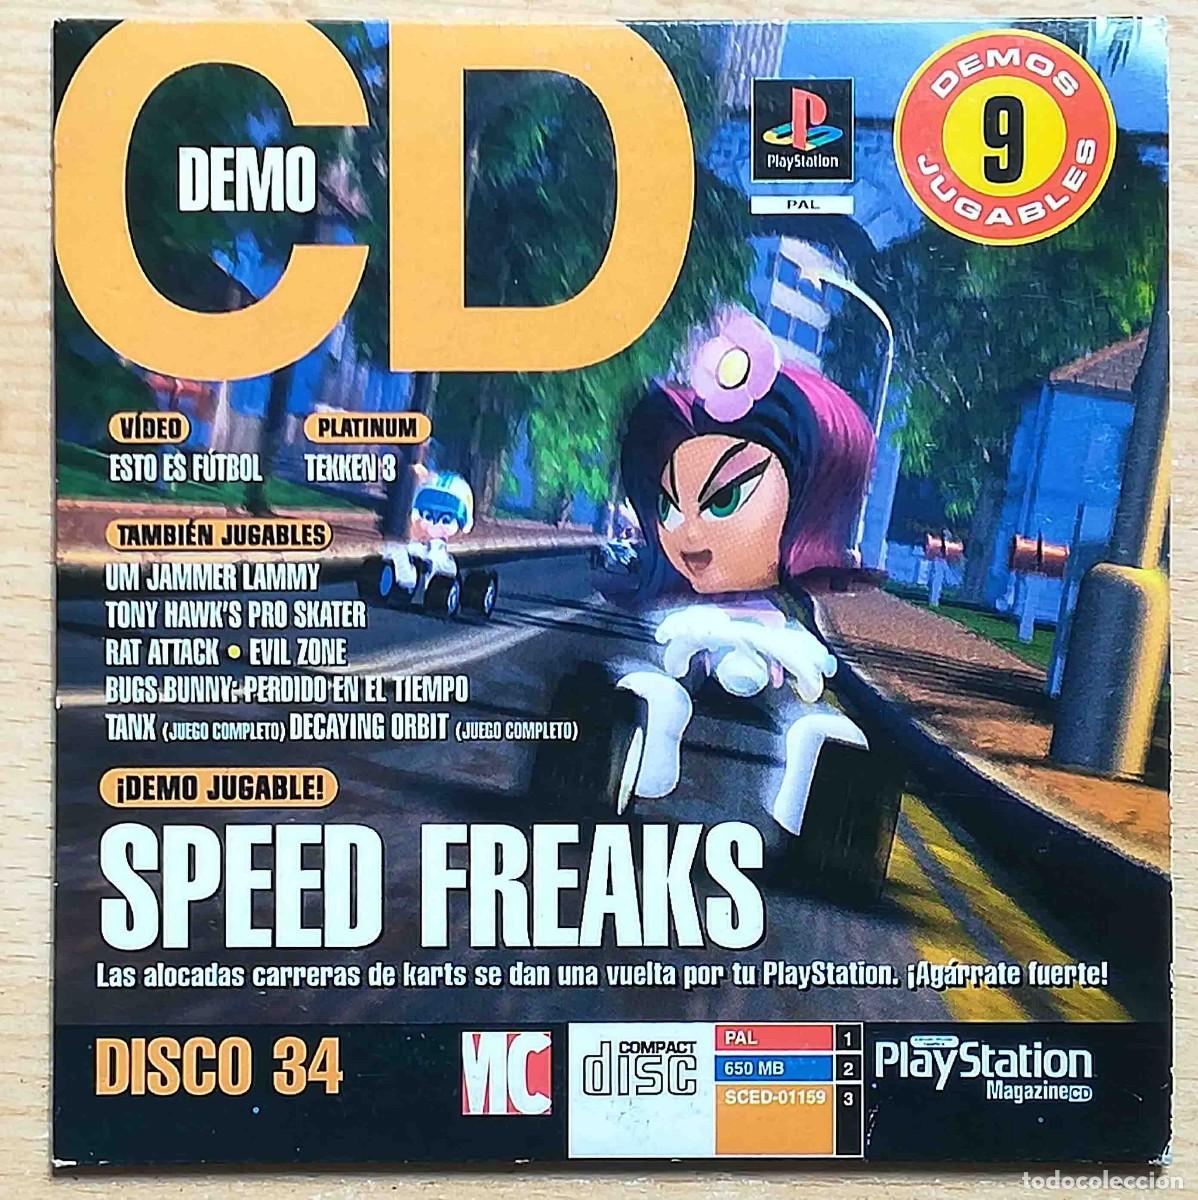 Playstation Magazin Demo CD (euro demo 49) - PlayStation 1 Játékok